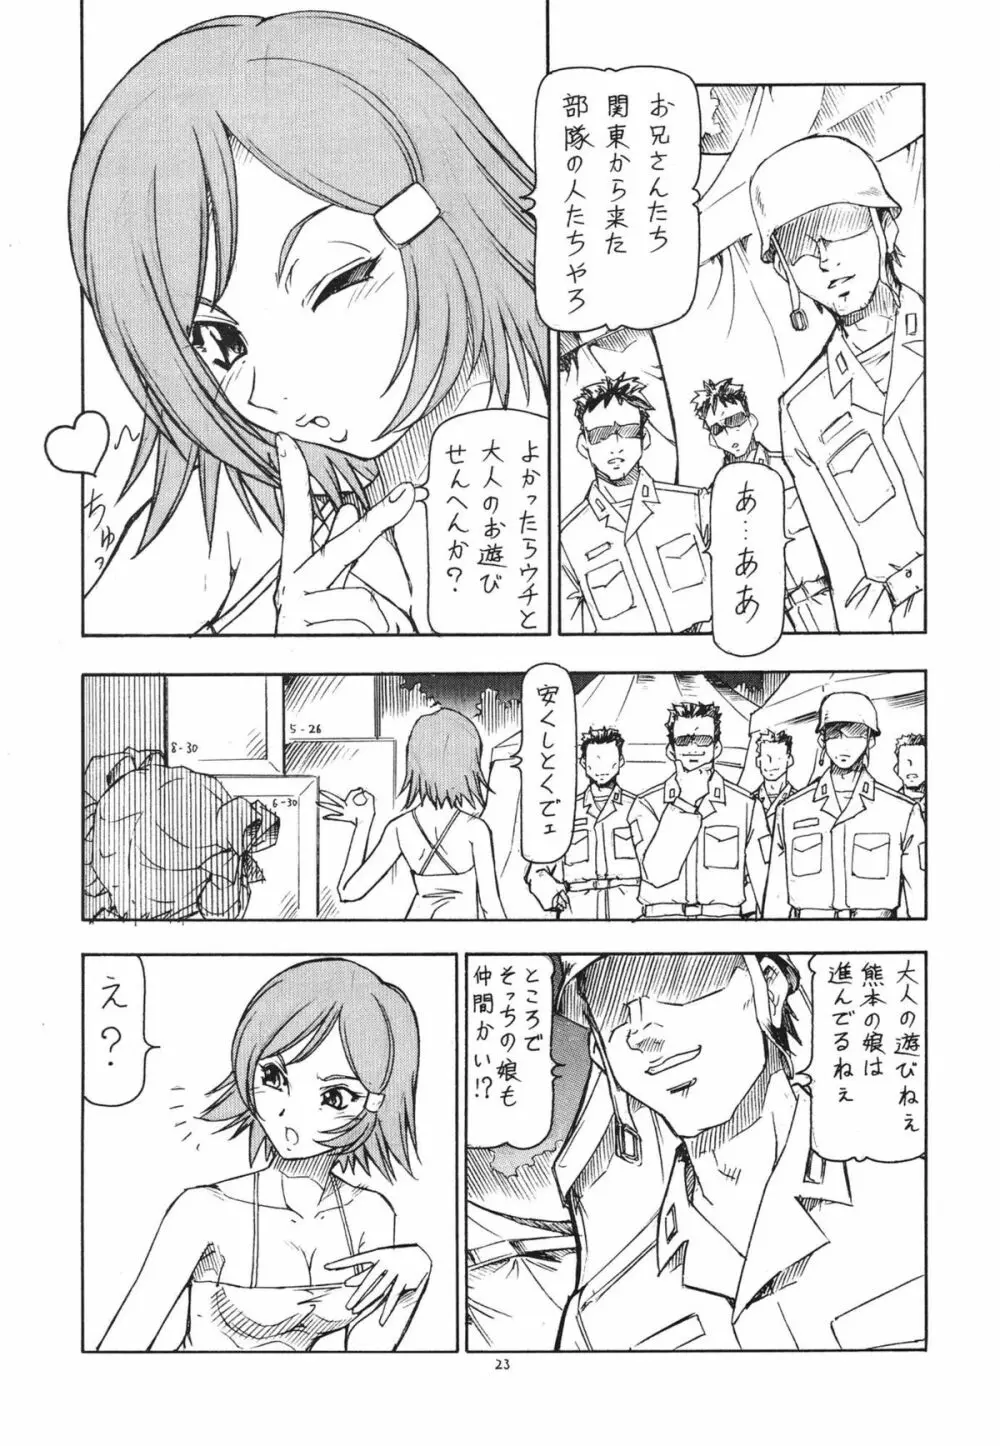 GPM.XXX ANIMATION 萌葱色の涙 TEAR DROPS 25ページ